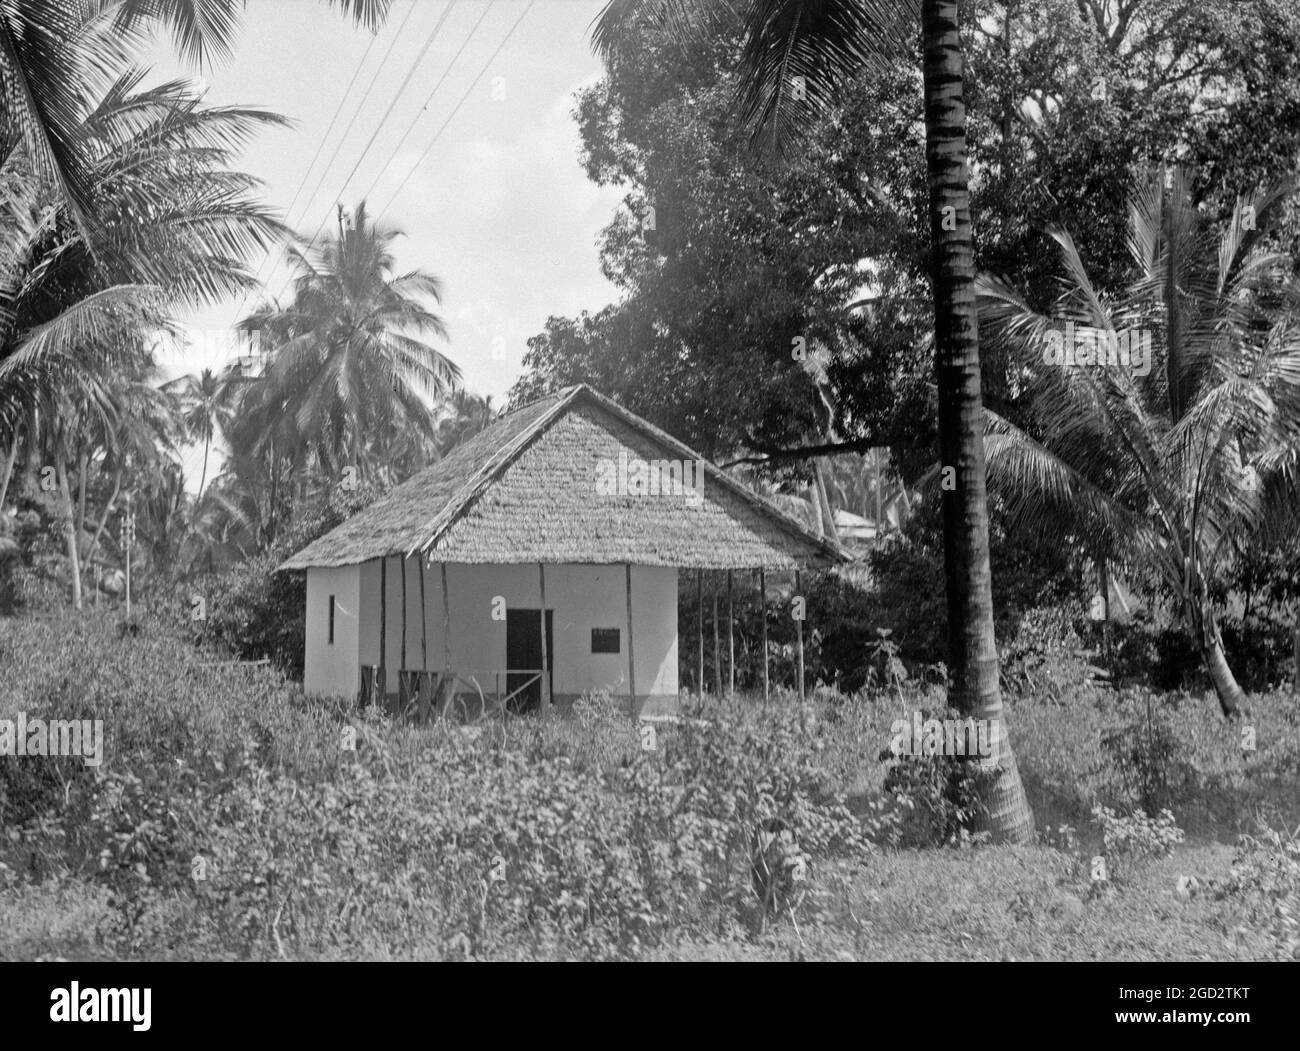 Zanzibar clove Black and White Stock Photos & Images - Alamy